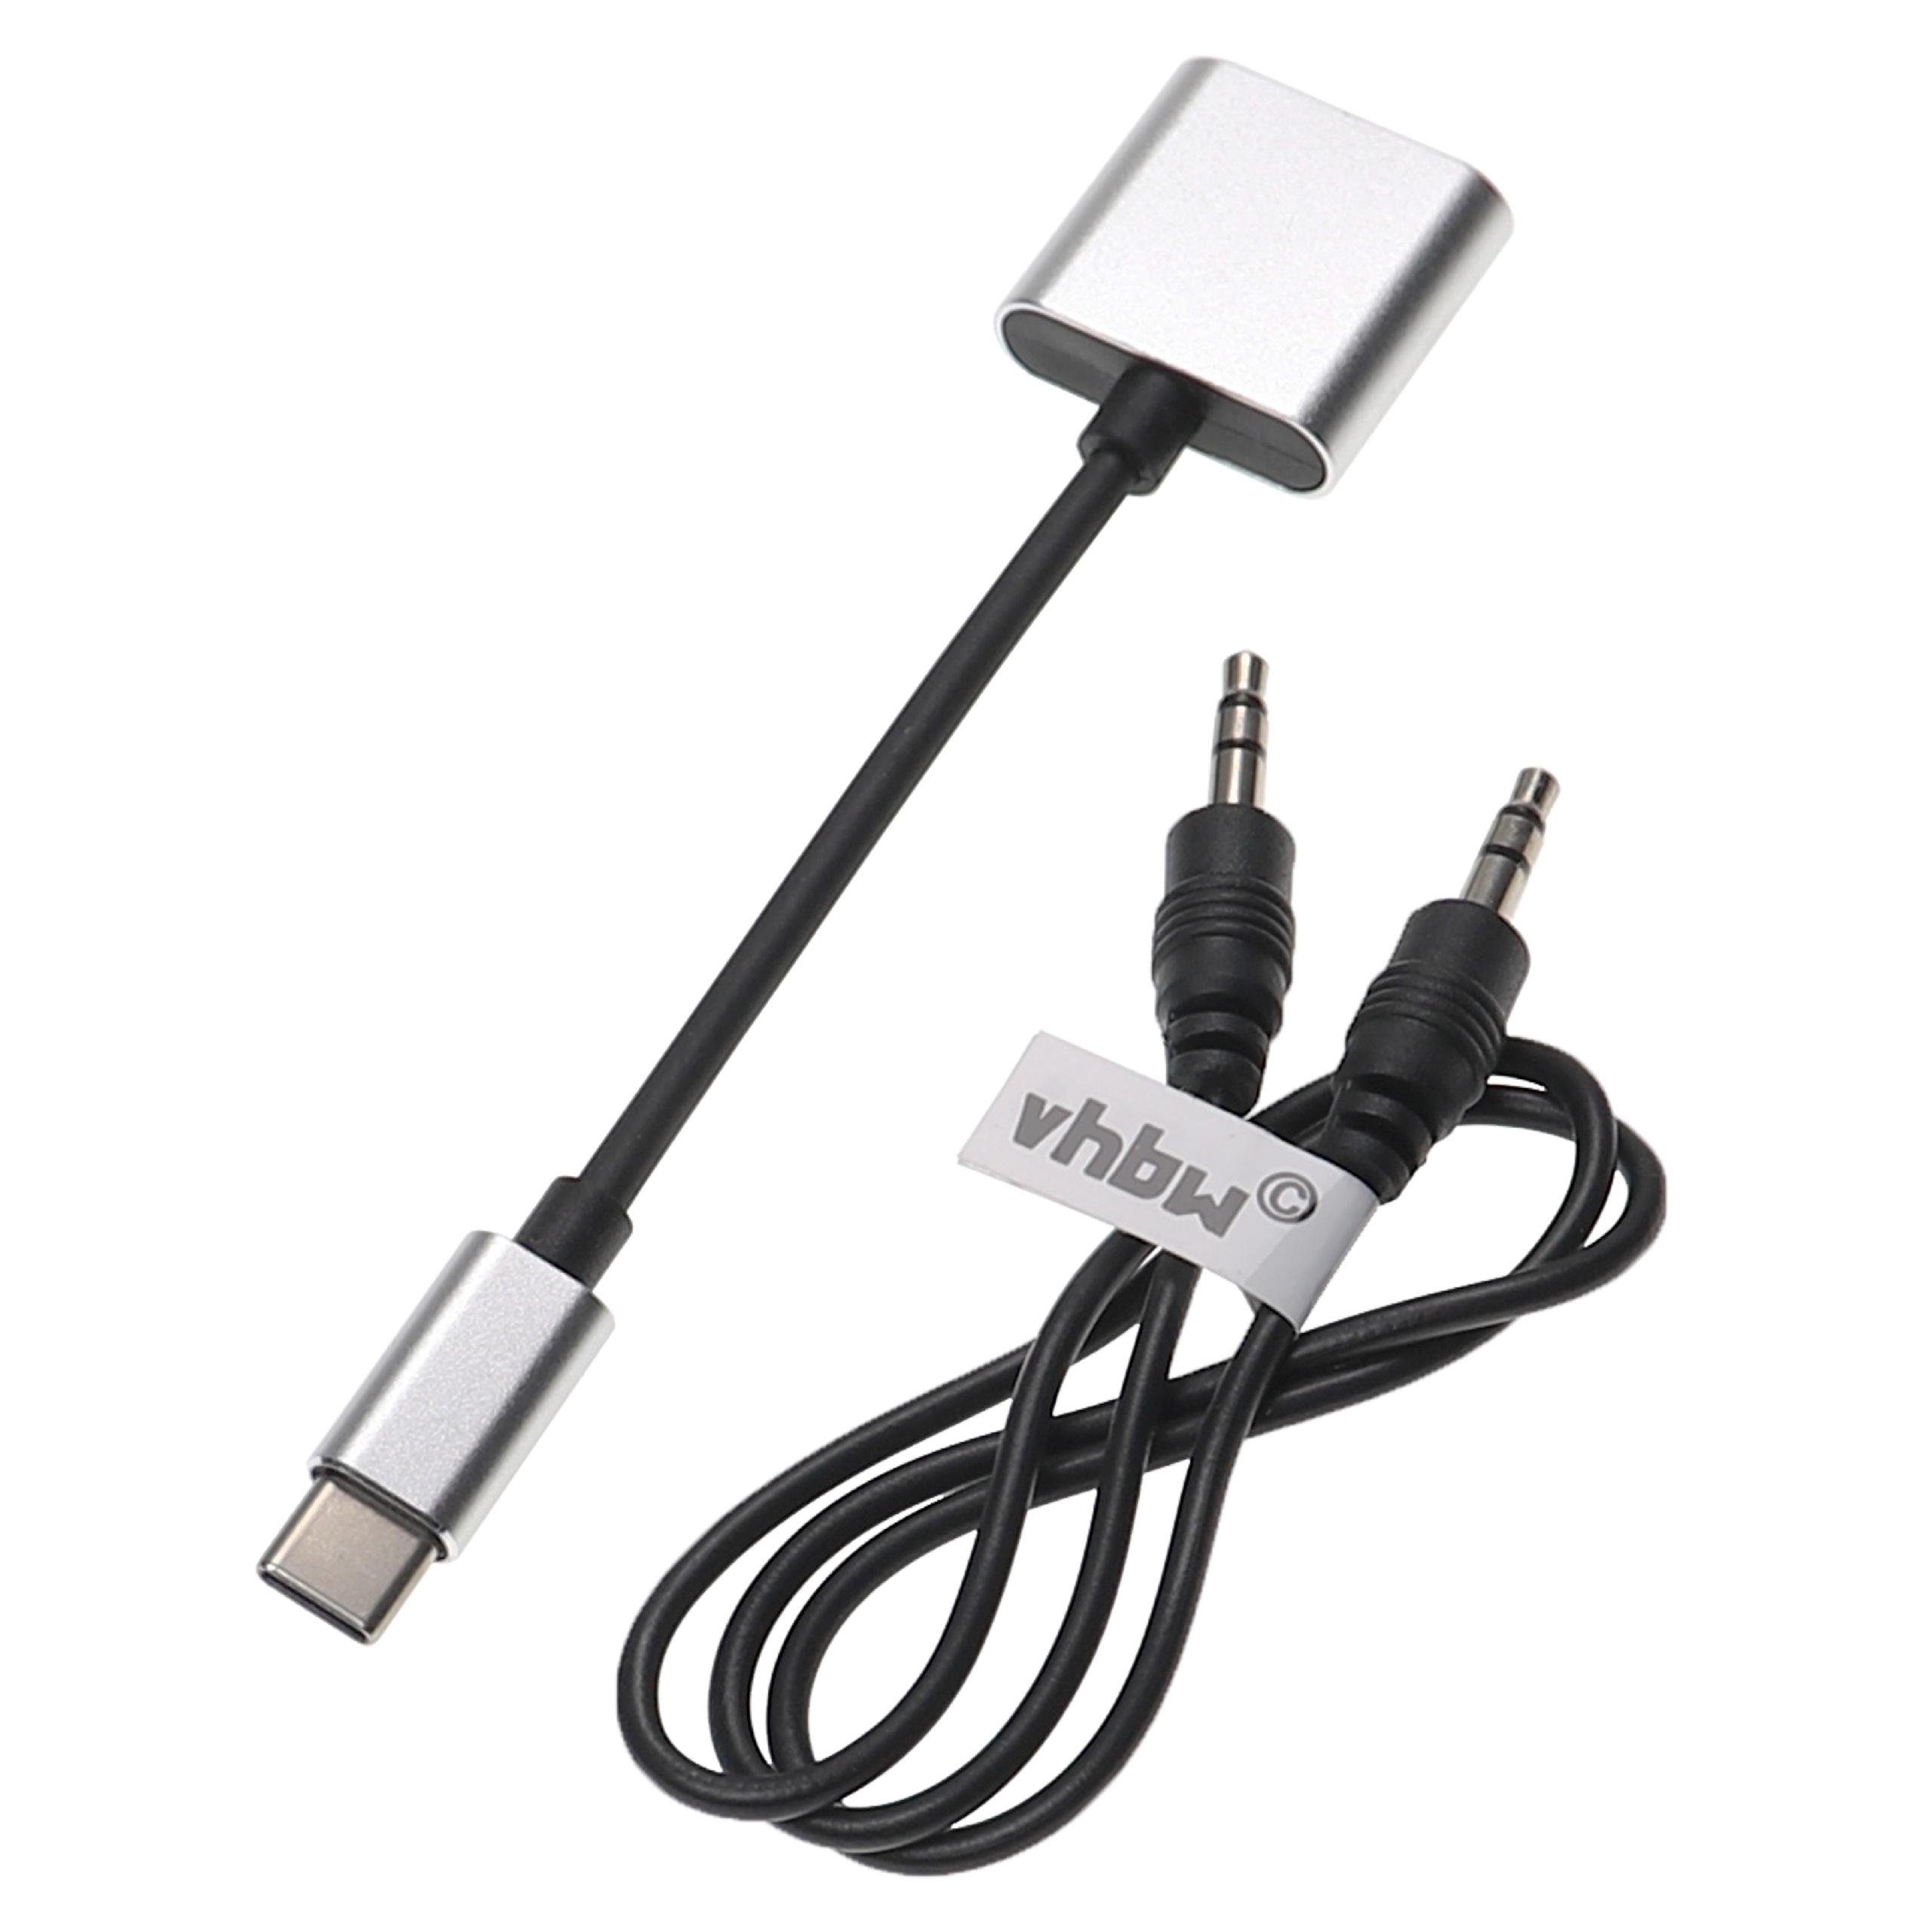 vhbw passend für OnePlus 5, 6, 3, 6T Kopfhörer / Smartphone / Mobilfunk USB-Adapter